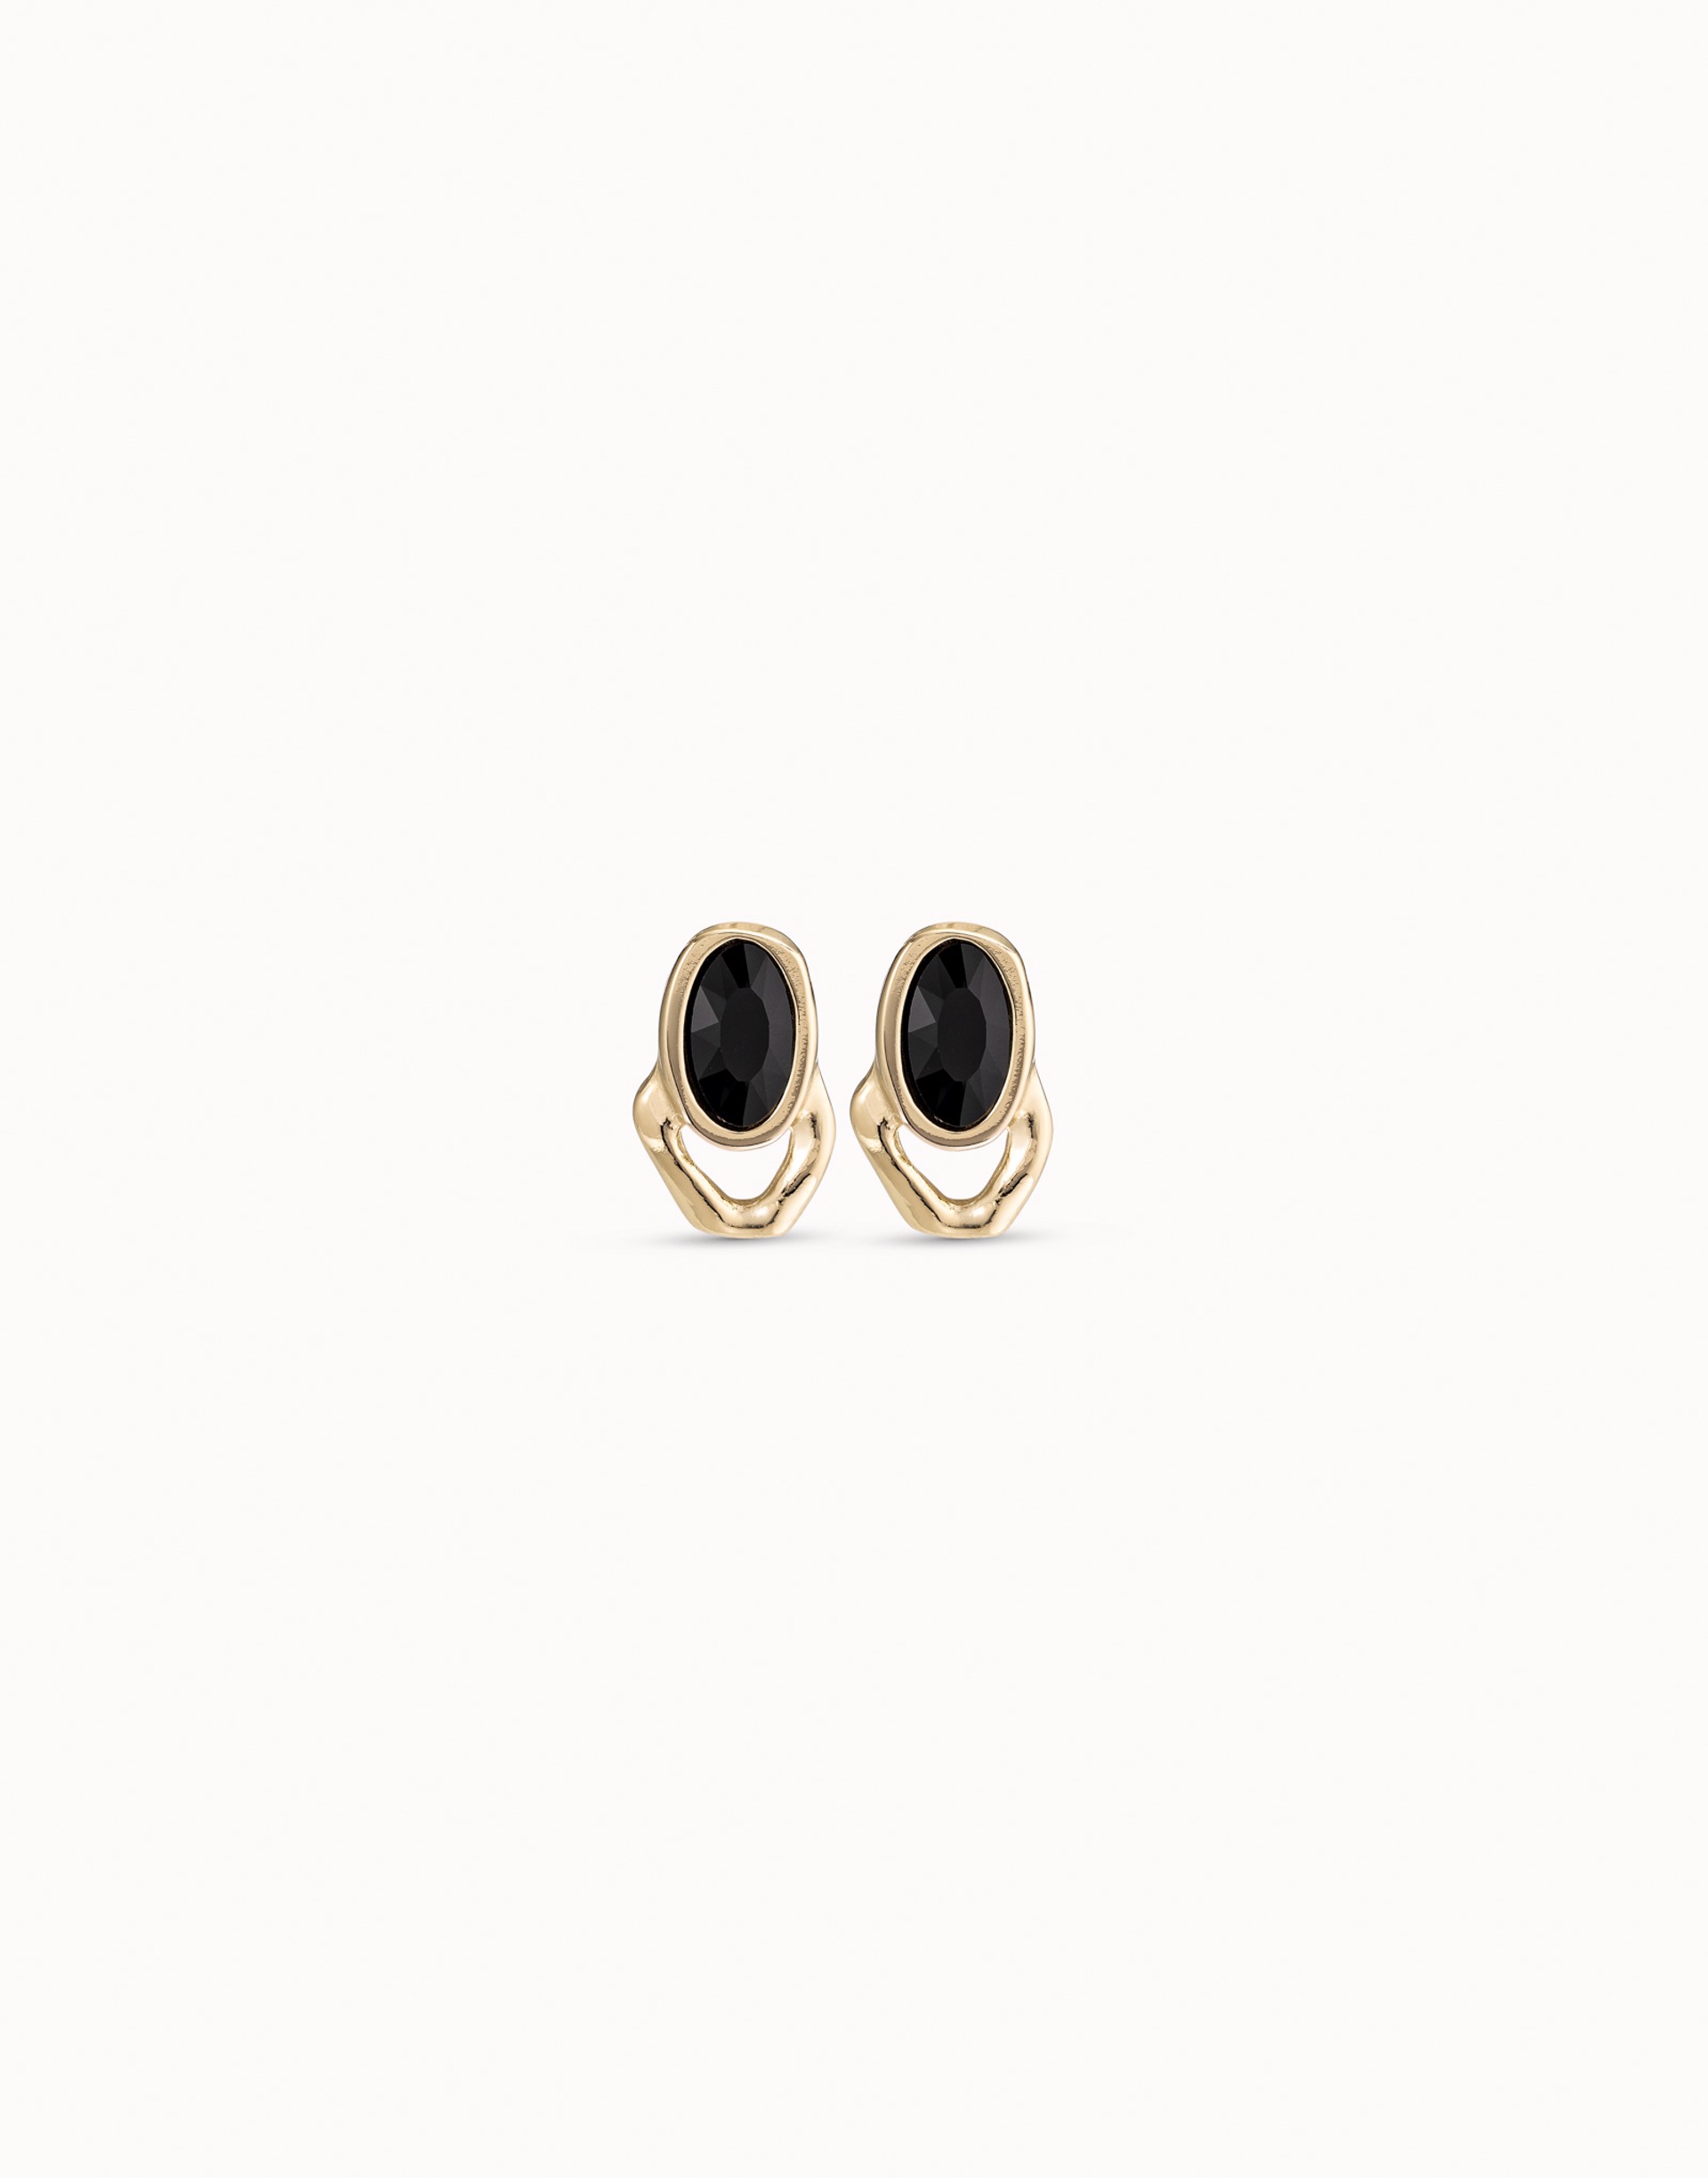 The Queen Earrings by UNO DE 50